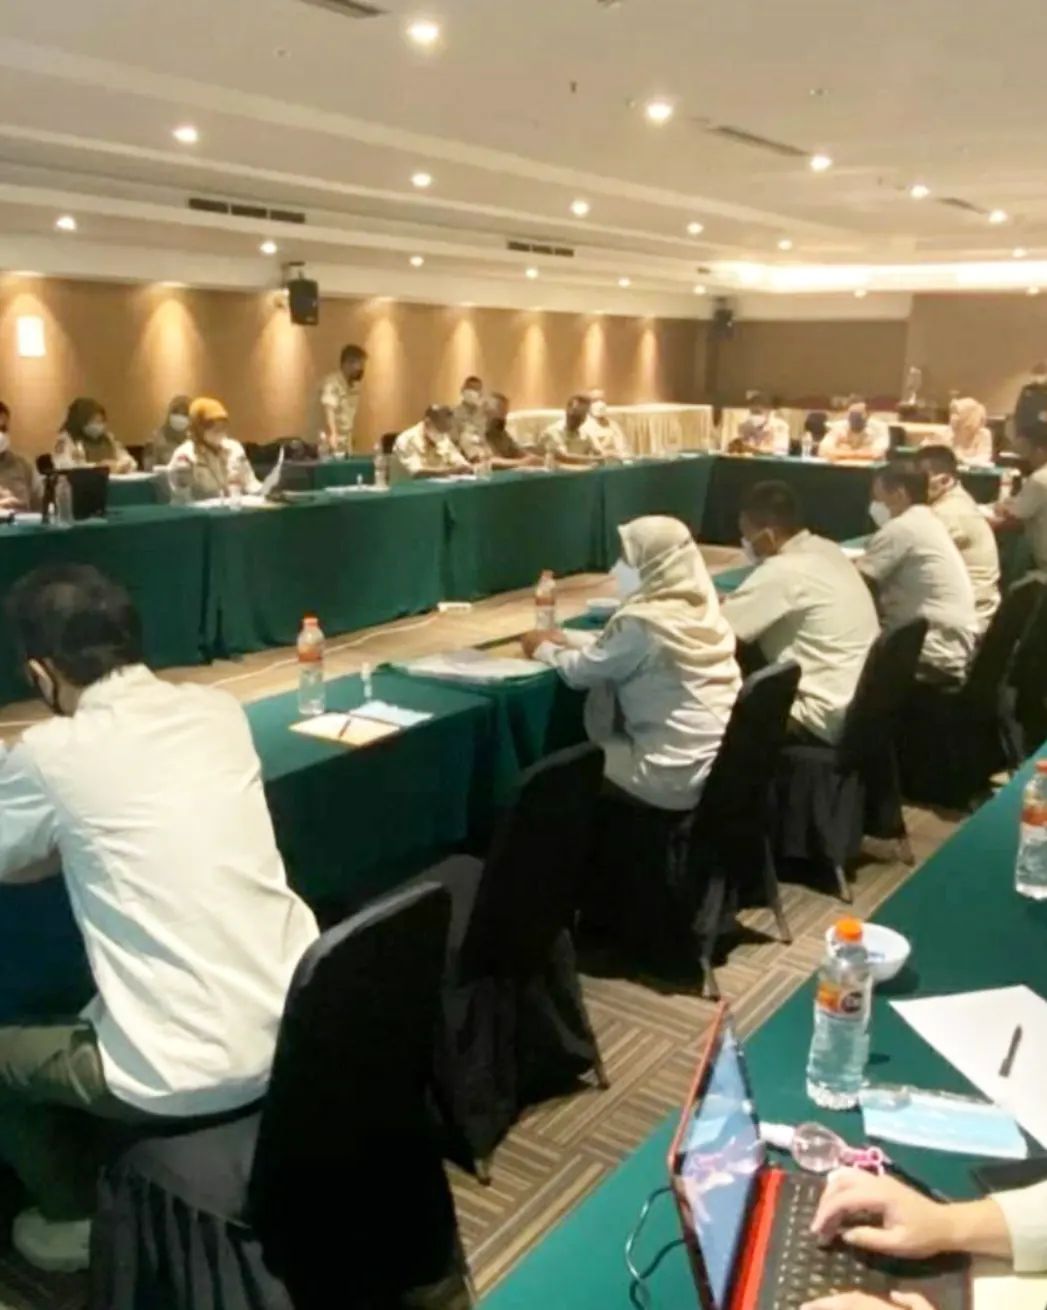 Kasatpol PP dan Jajaran Hadiri Rapat Koordinasi Bersama Direktur Satpol PP dan Linmas Kemendagri di Jakarta